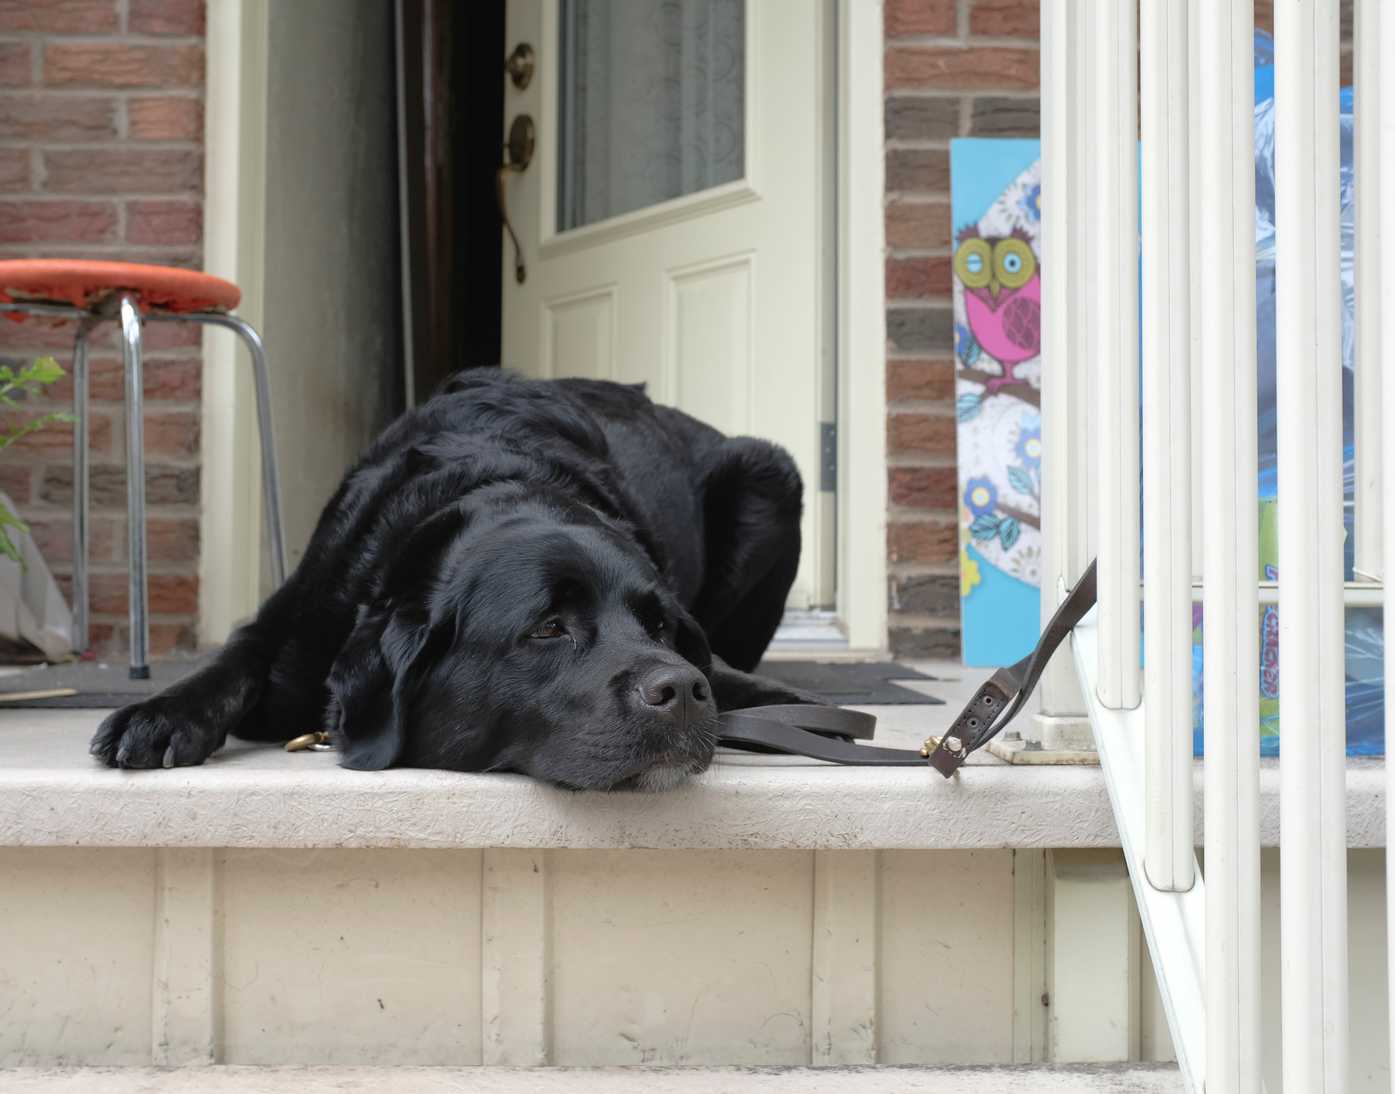 A dog enjoying the porch